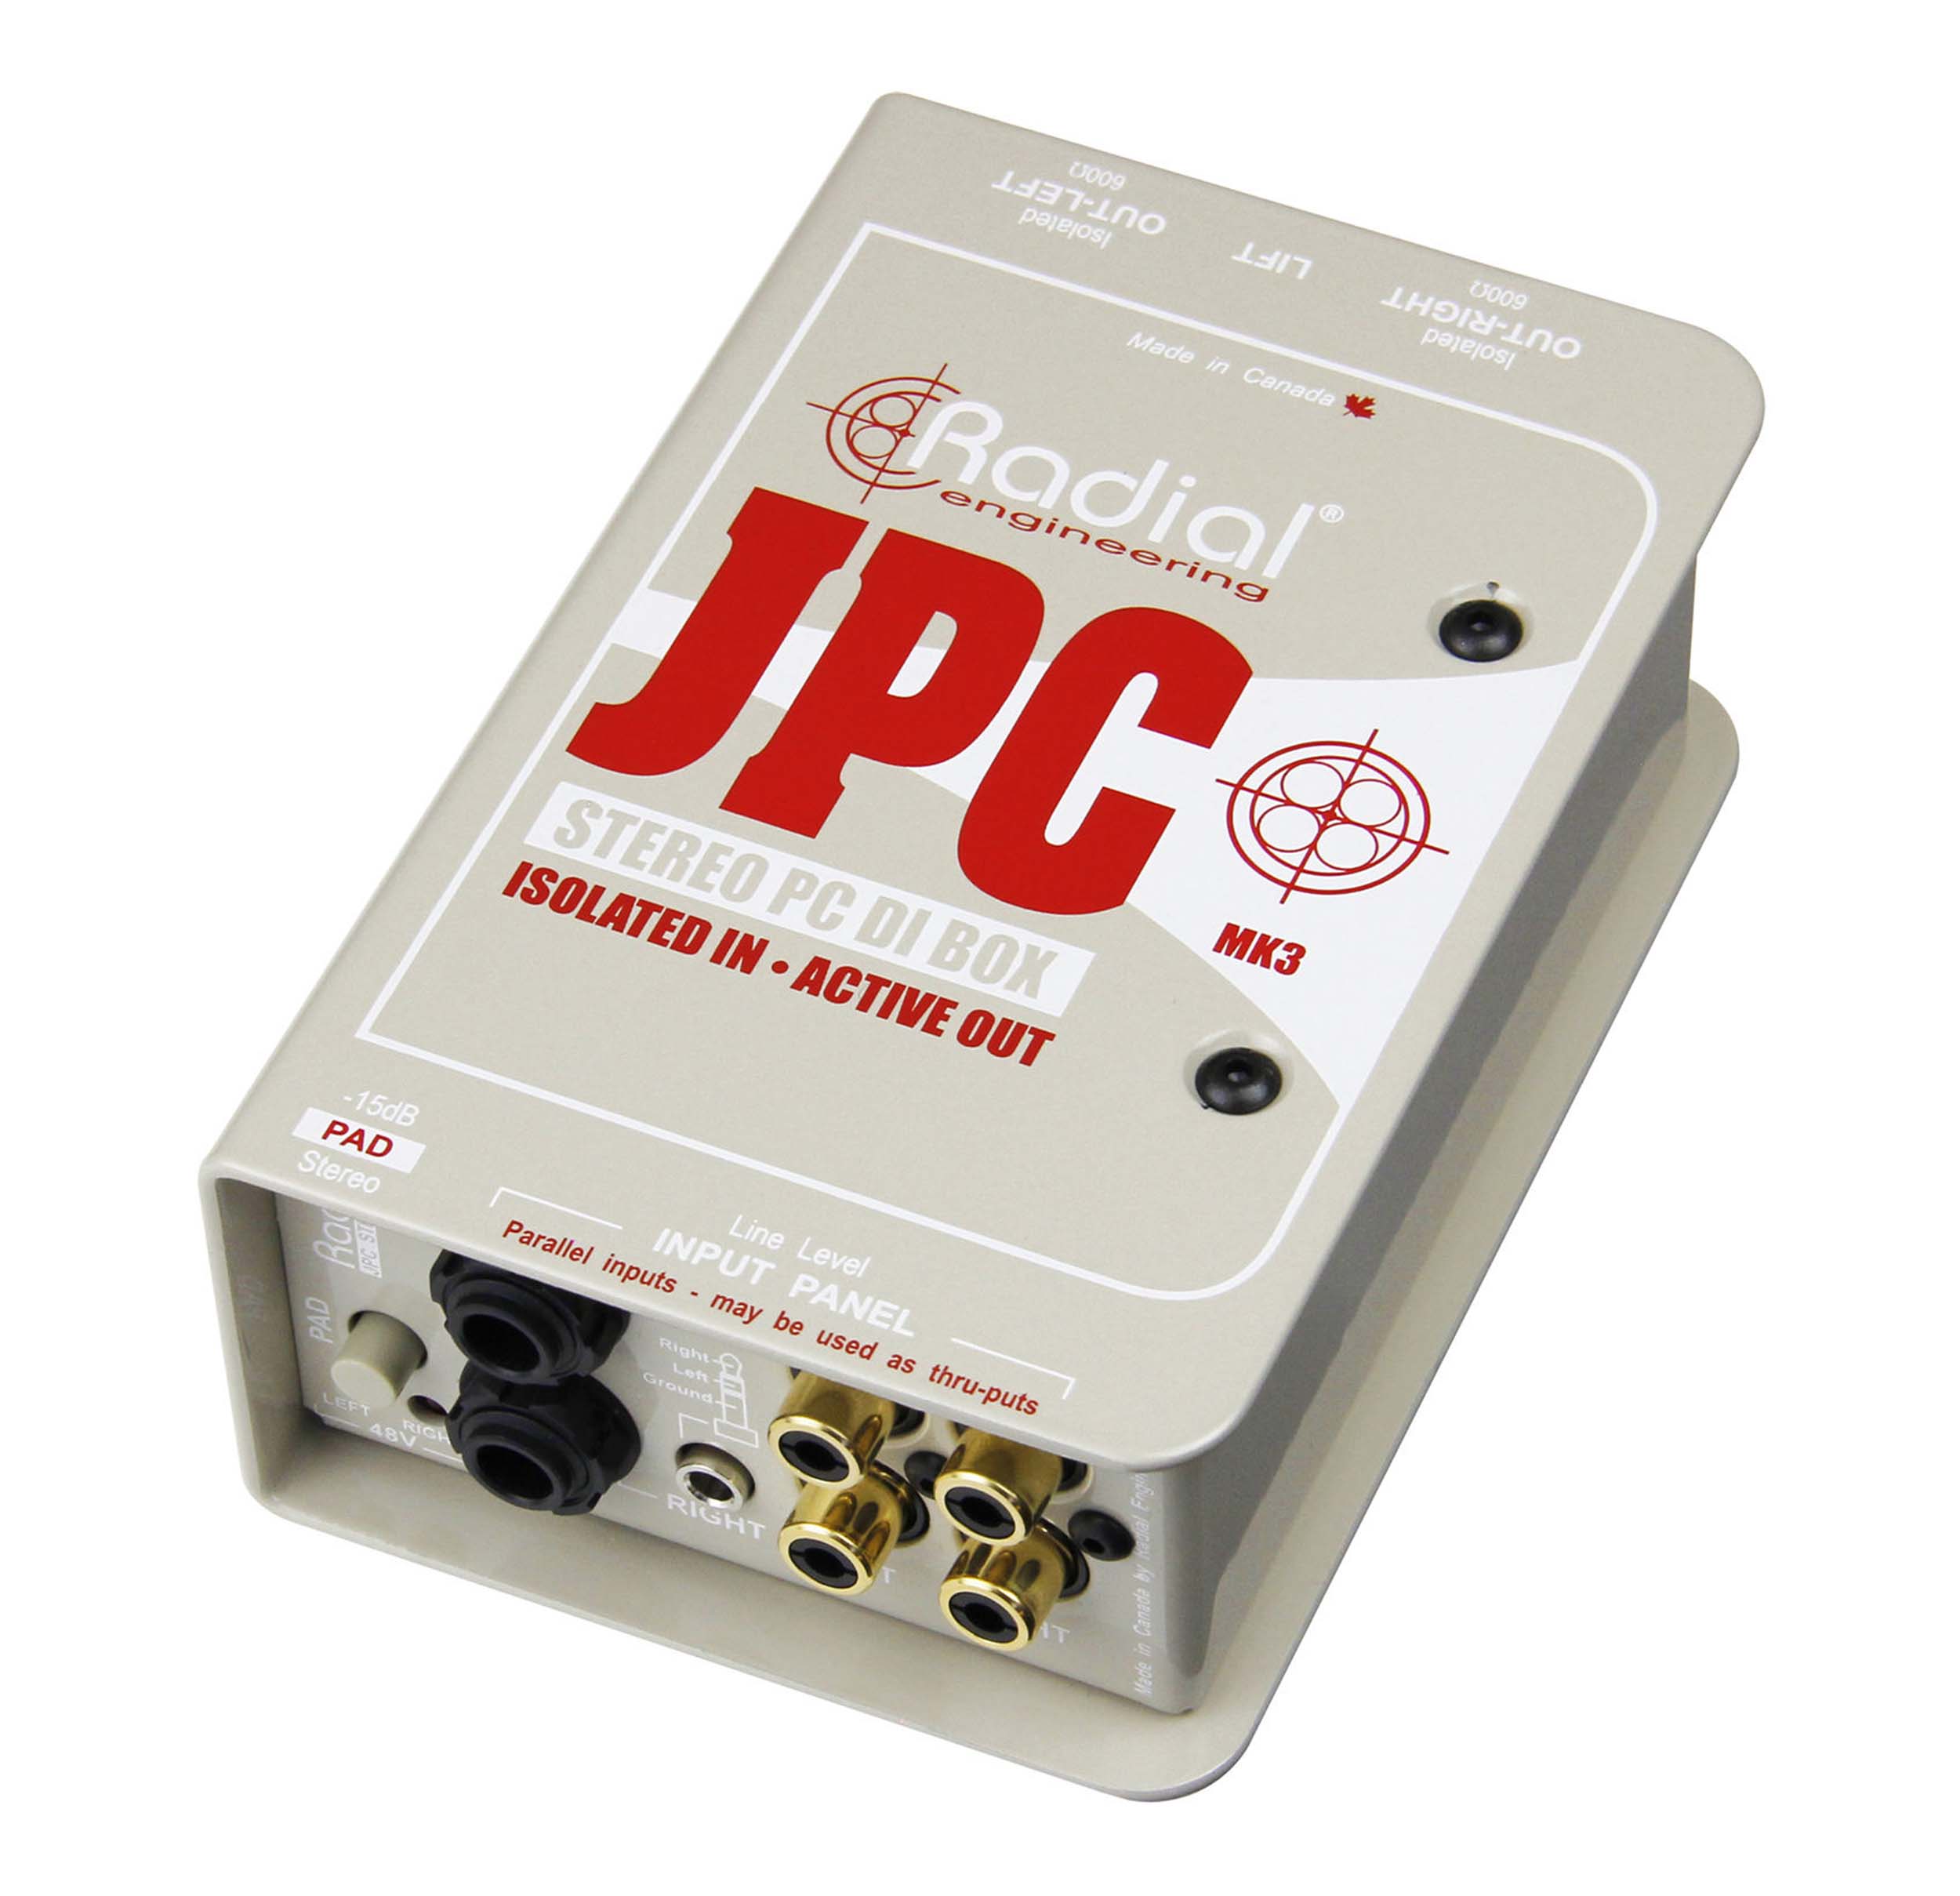 Radial Engineering RAD-JPC Stereo PC-AV Direct Box by Radial Engineering